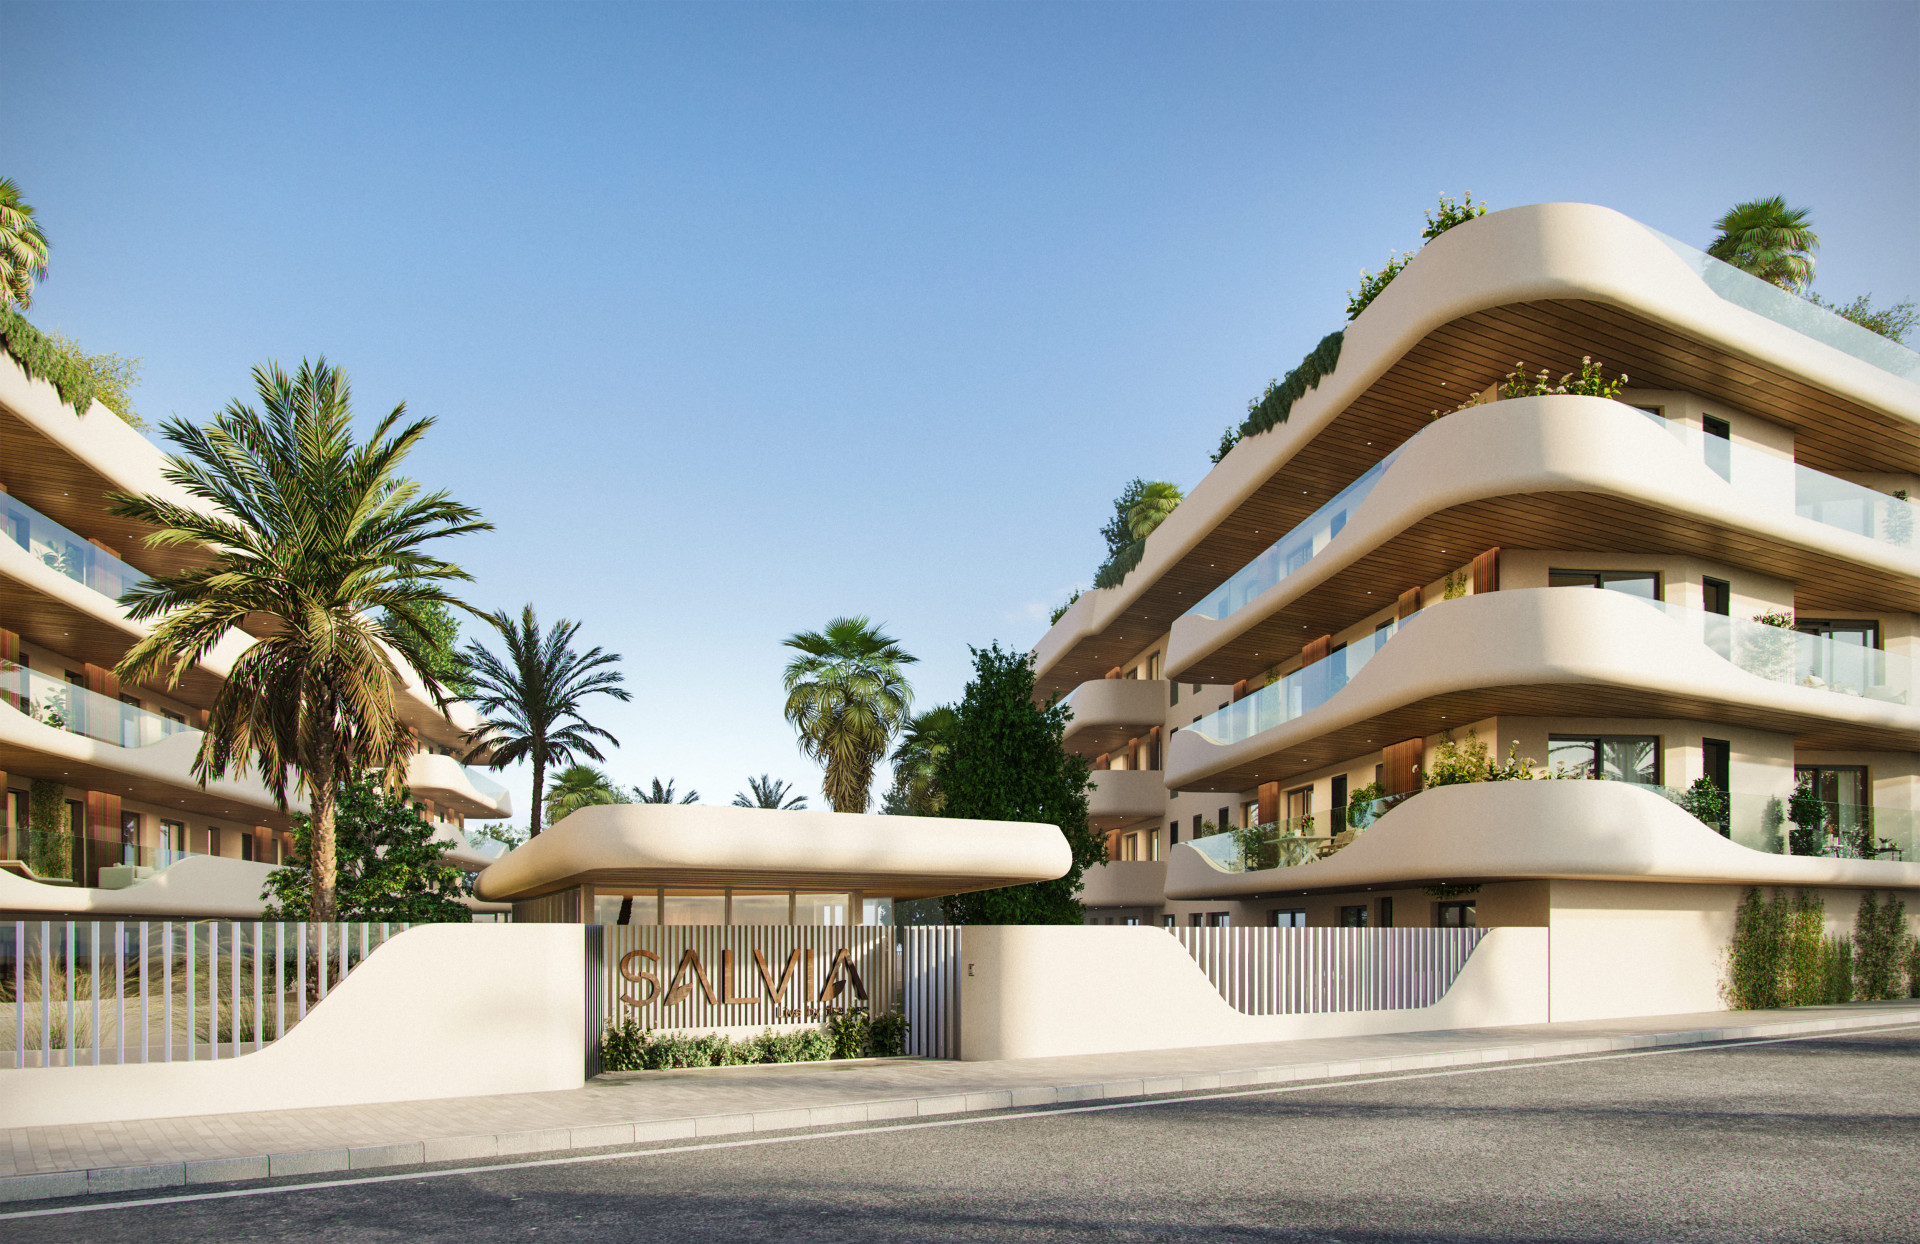 Brand new 4 bedroom villa in the heart of San Pedro, Marbella